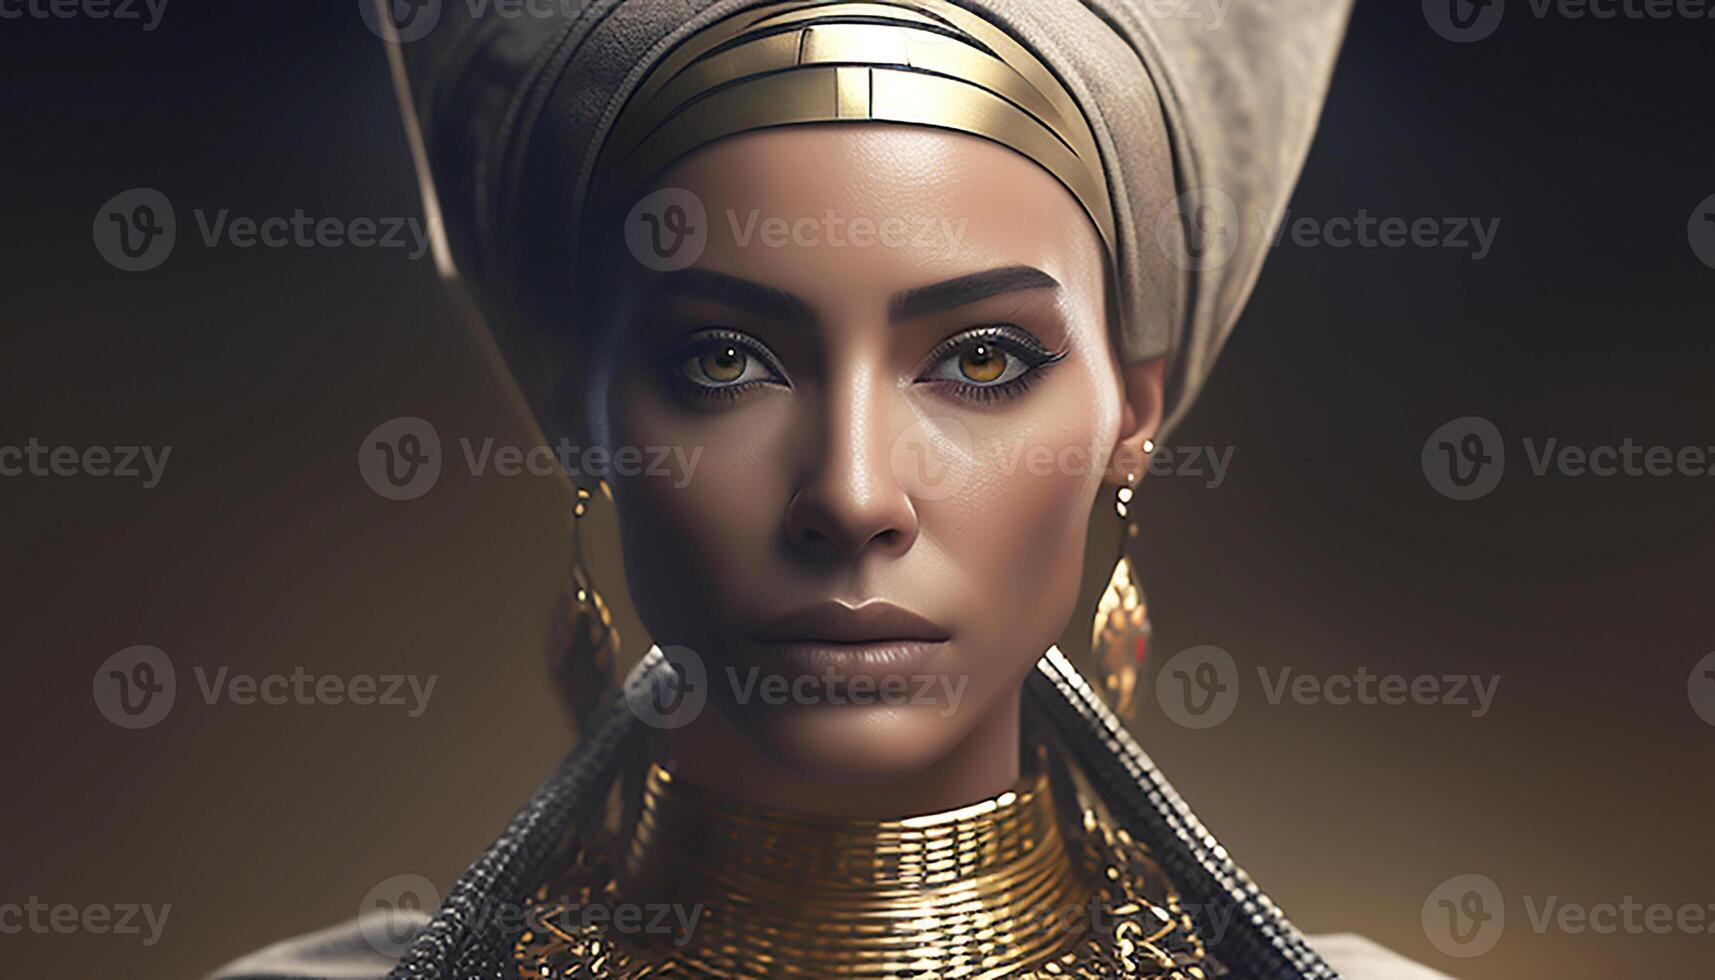 Ankhesenamun, portrait of a woman queen of ancient Egypt. photo